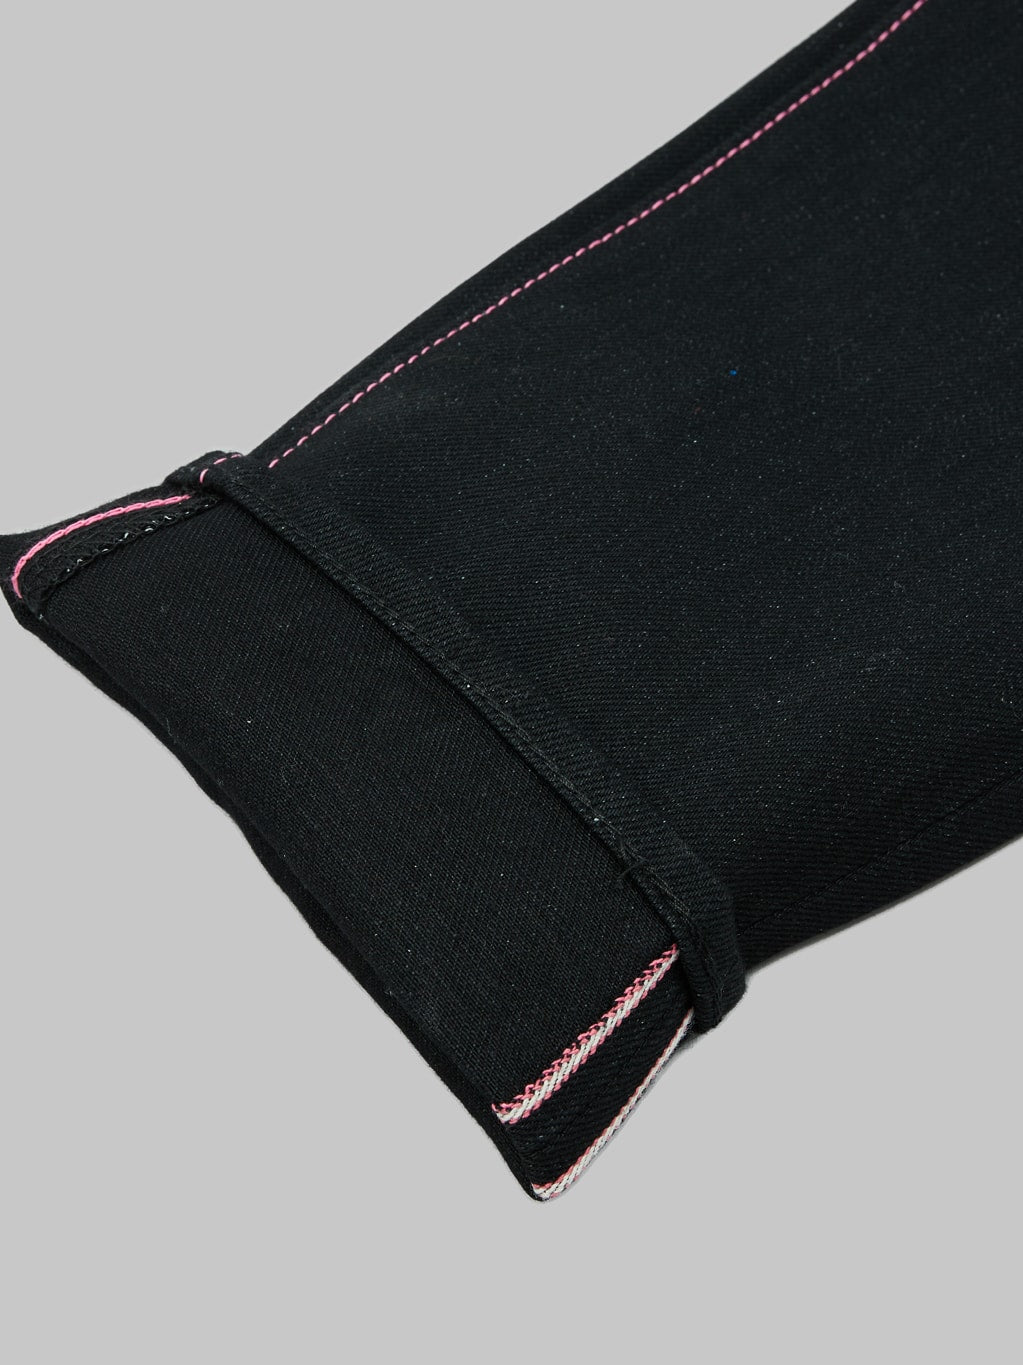 momotaro 0405b selvedge black denim high tapered jeans selvedge closeup